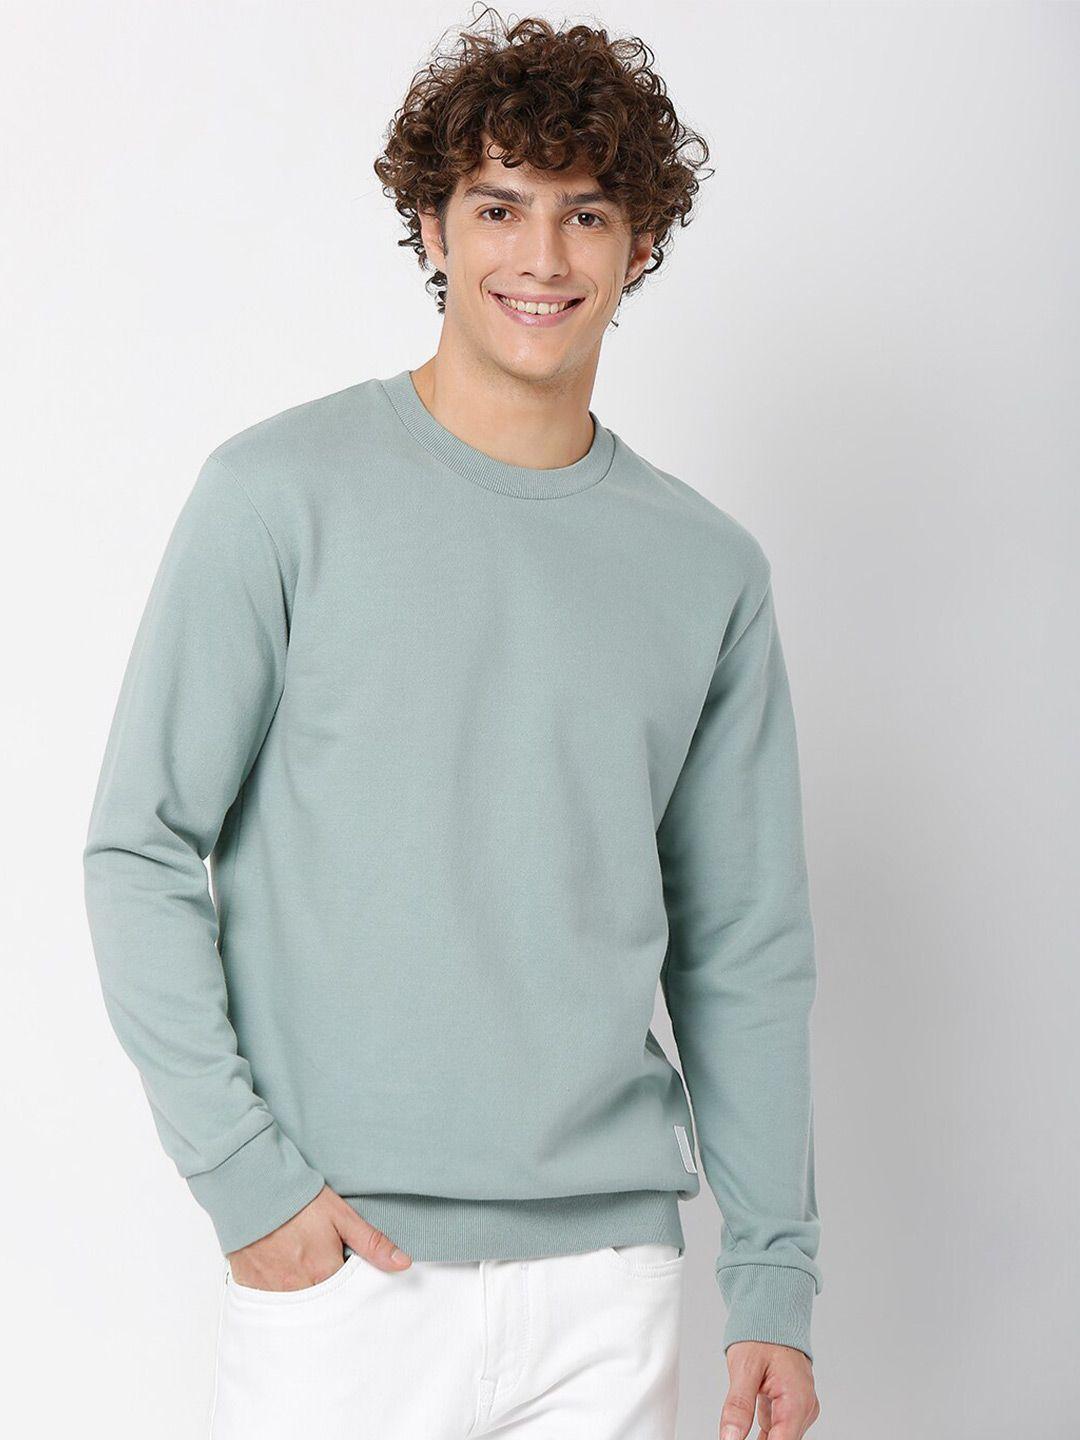 mufti-men-solid-pure-cotton-sweatshirt